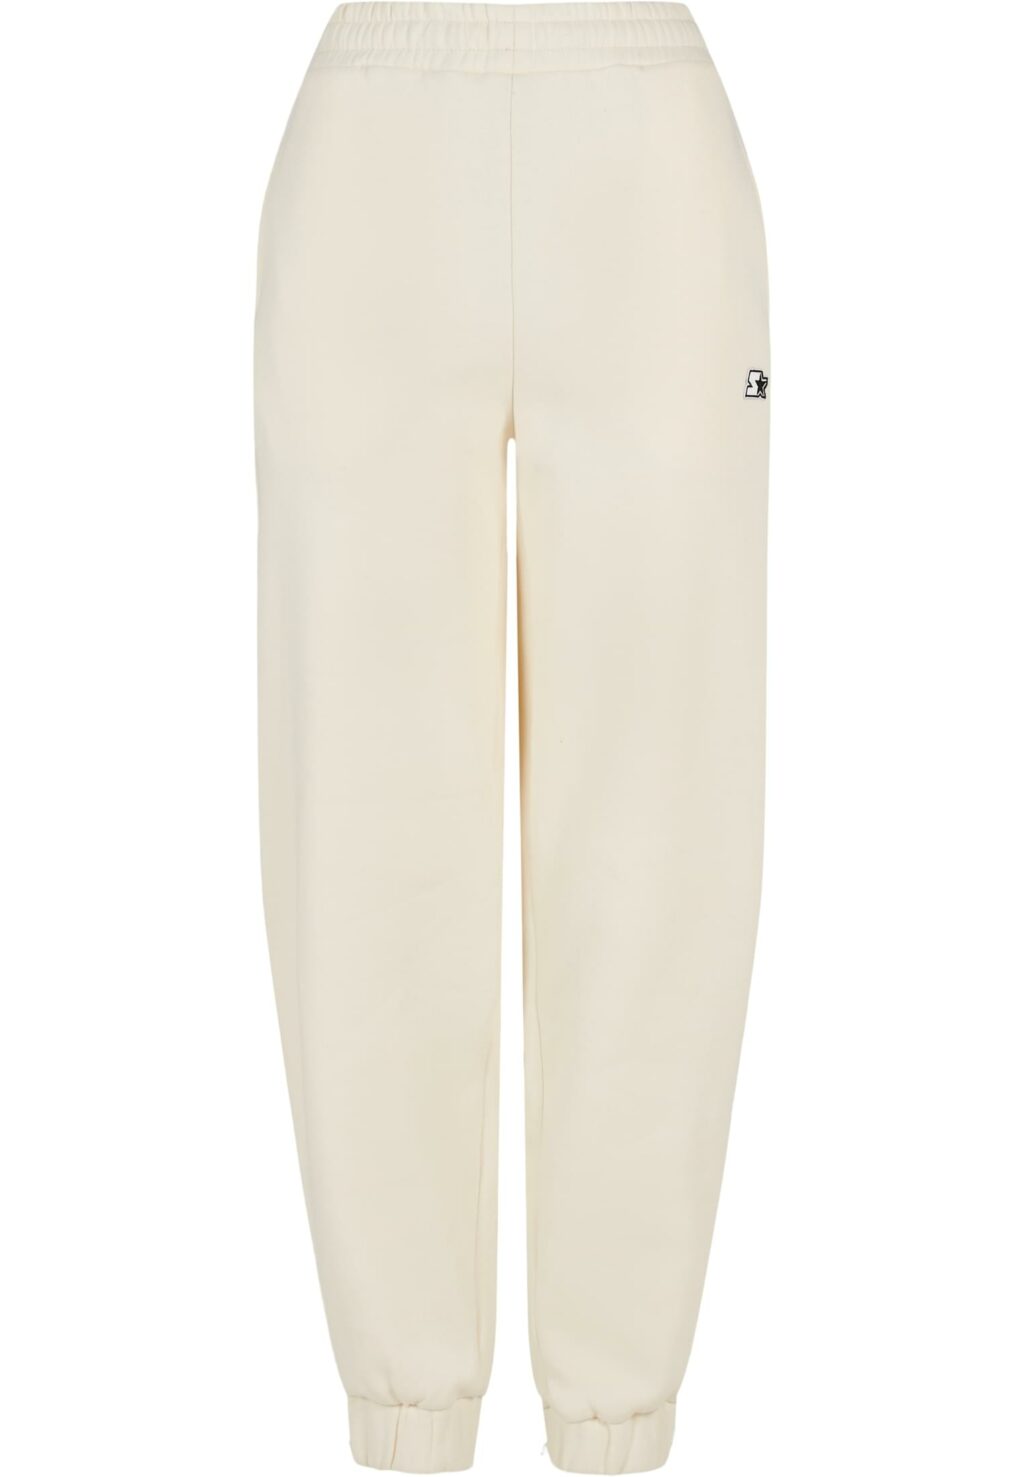 Ladies Starter Essential Sweat Pants palewhite ST229